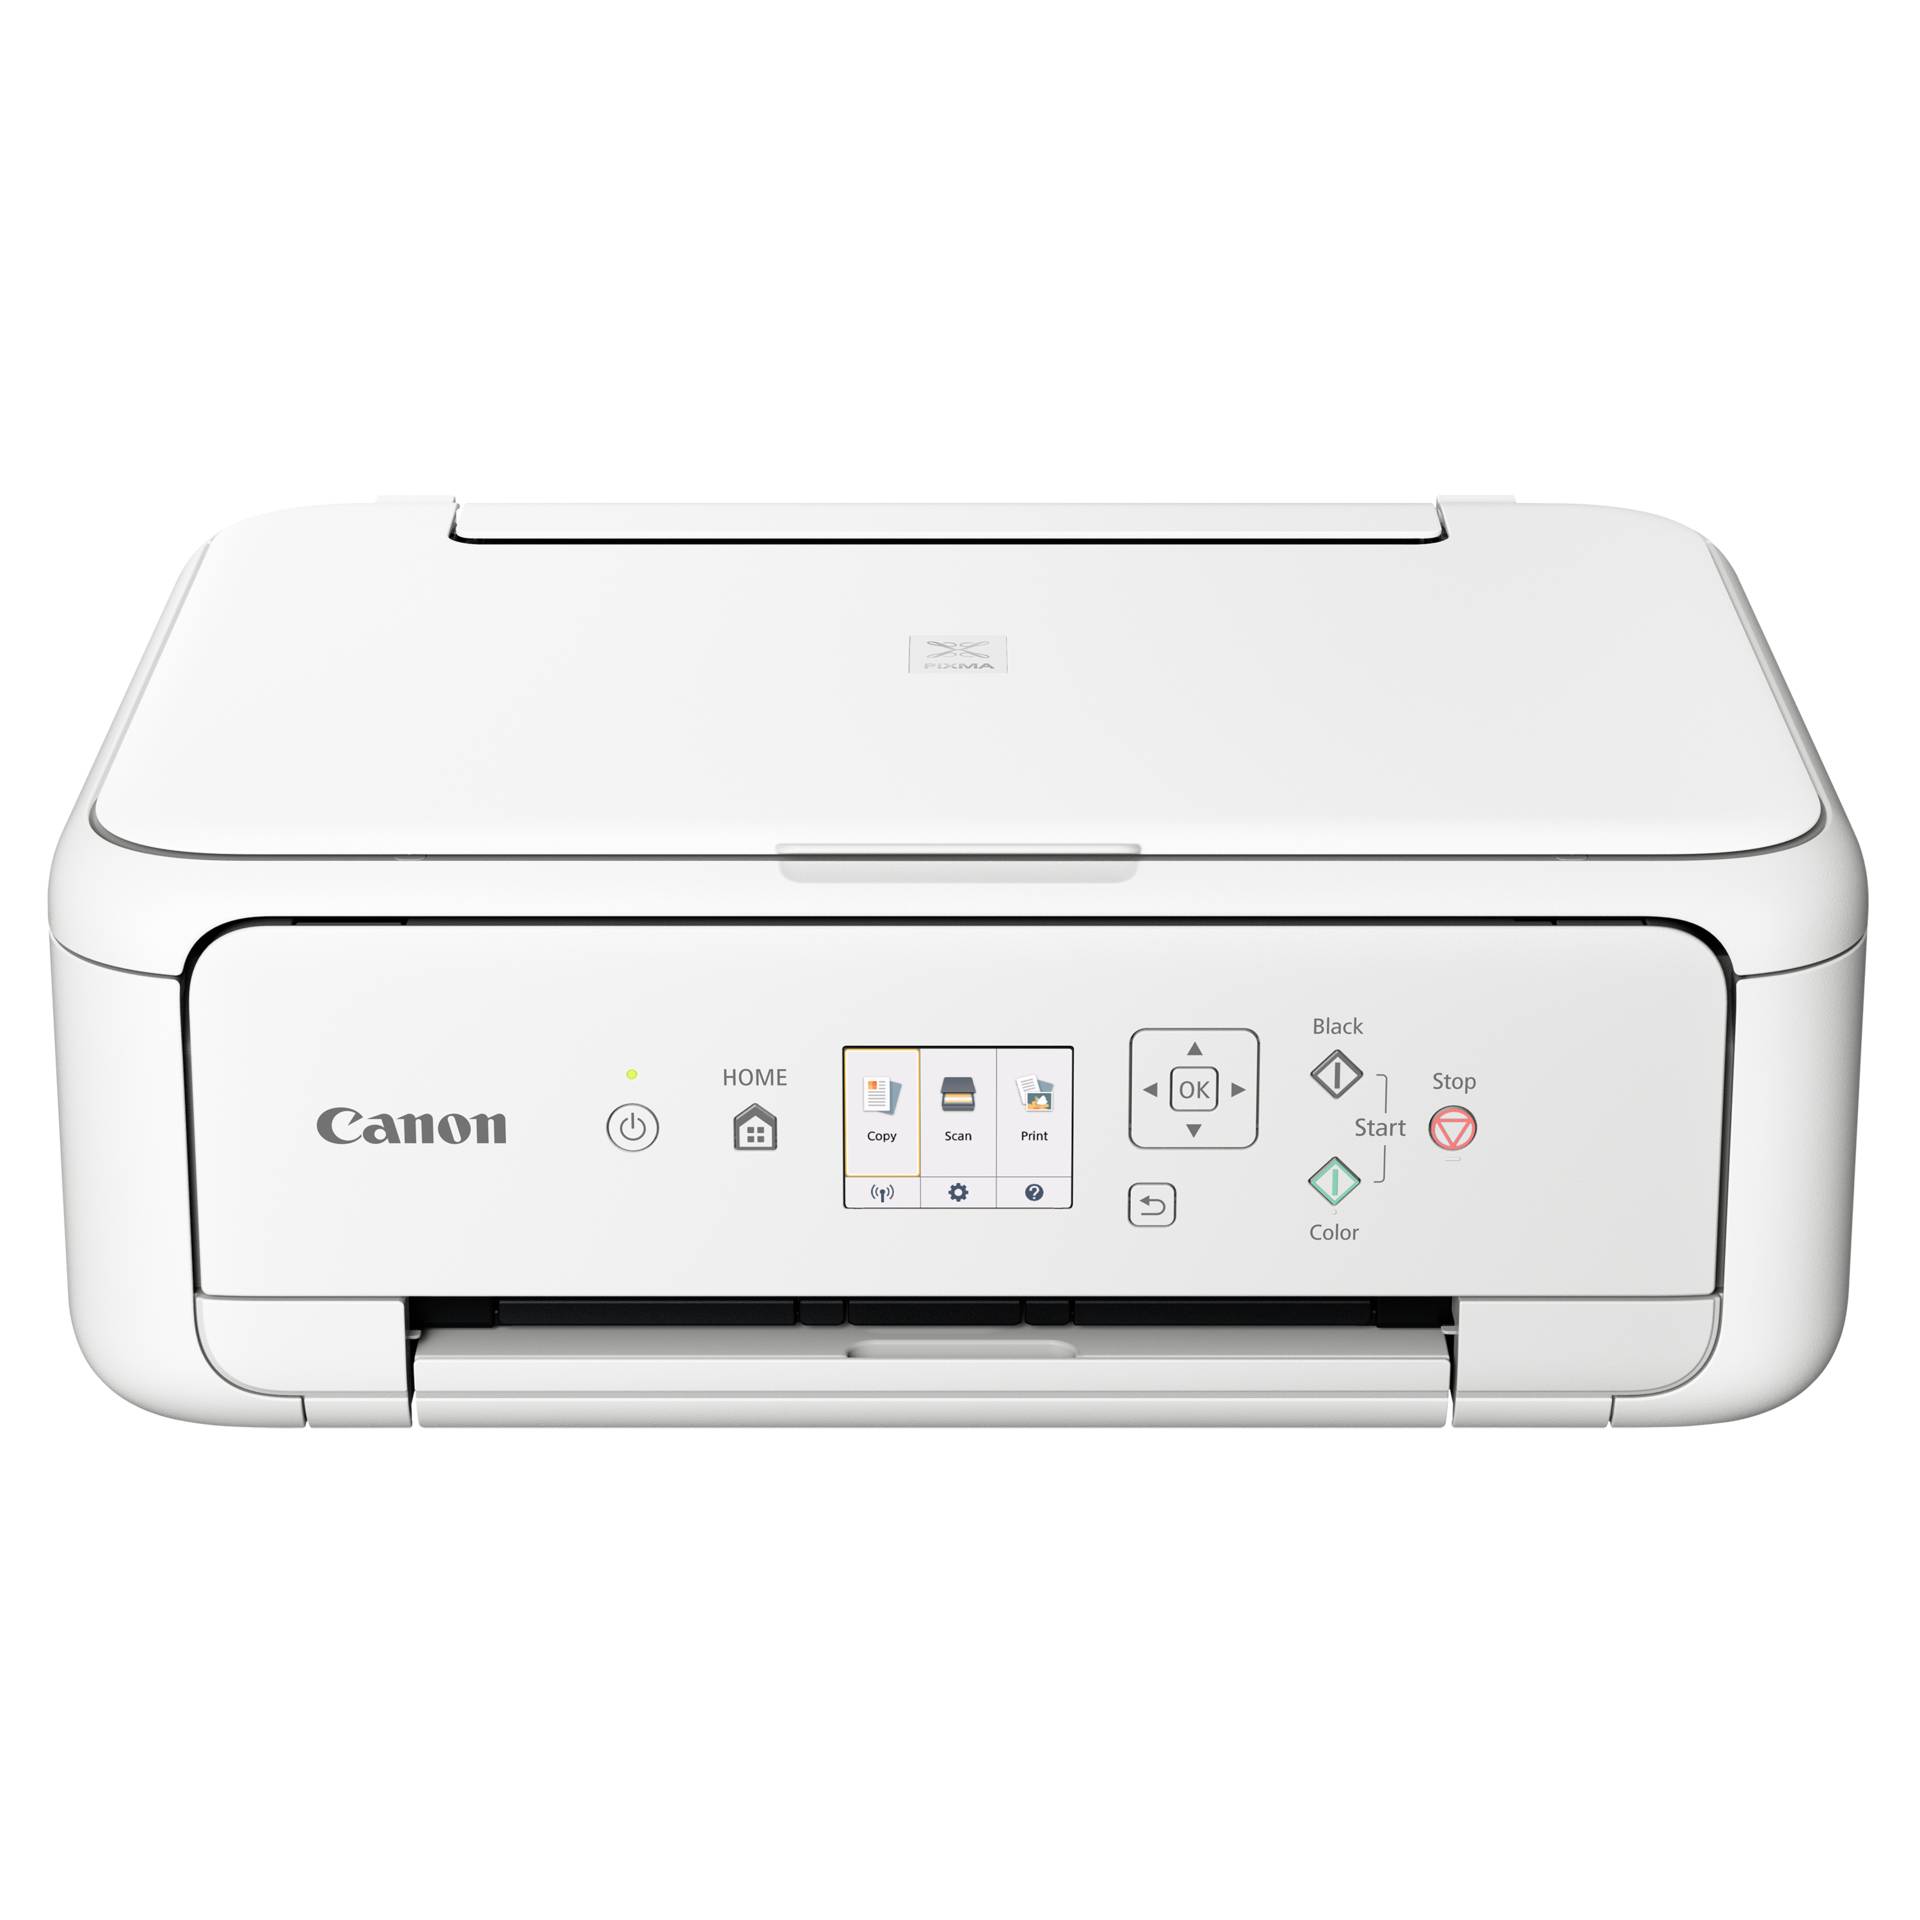 Canon PIXMA TS5151 weiß, WLAN, Tinten-Multifunktionsgerät, Drucker/Scanner/Kopierer